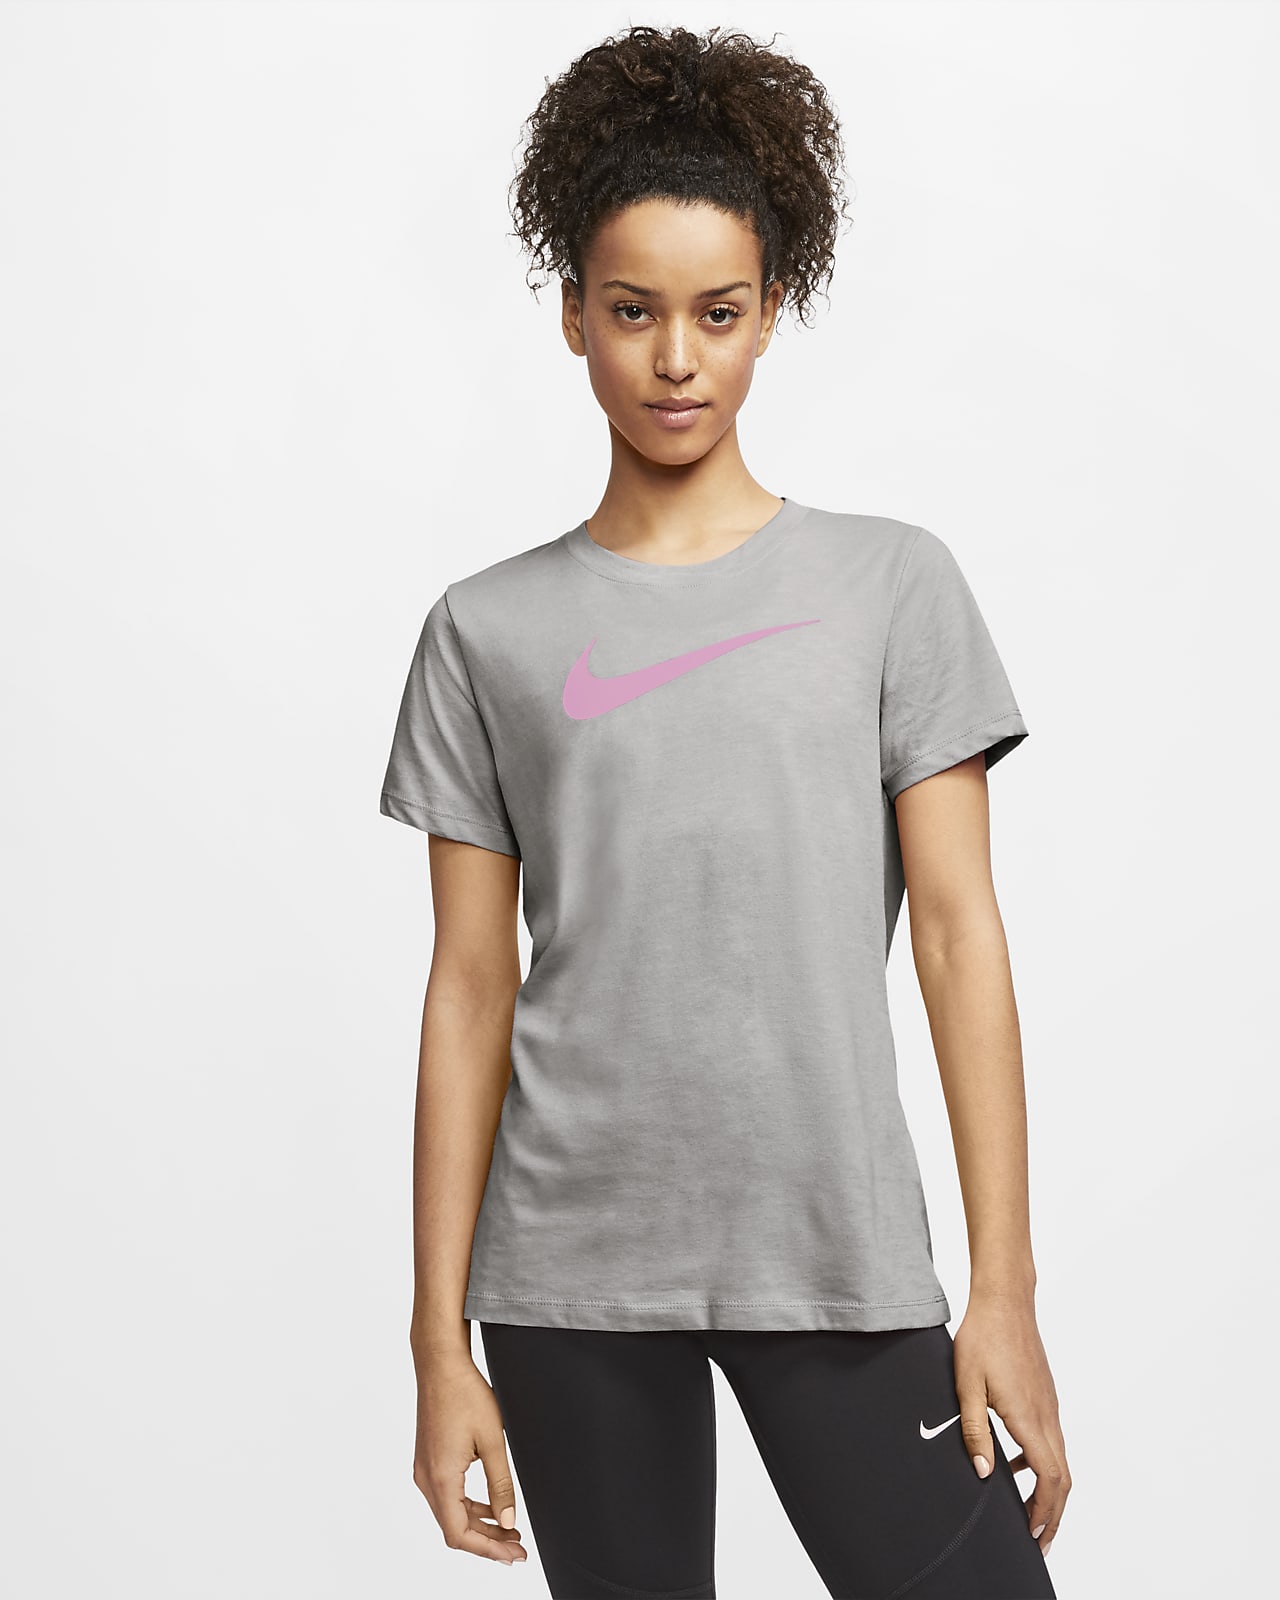 Nike Dri-FIT Women's Training T-Shirt 